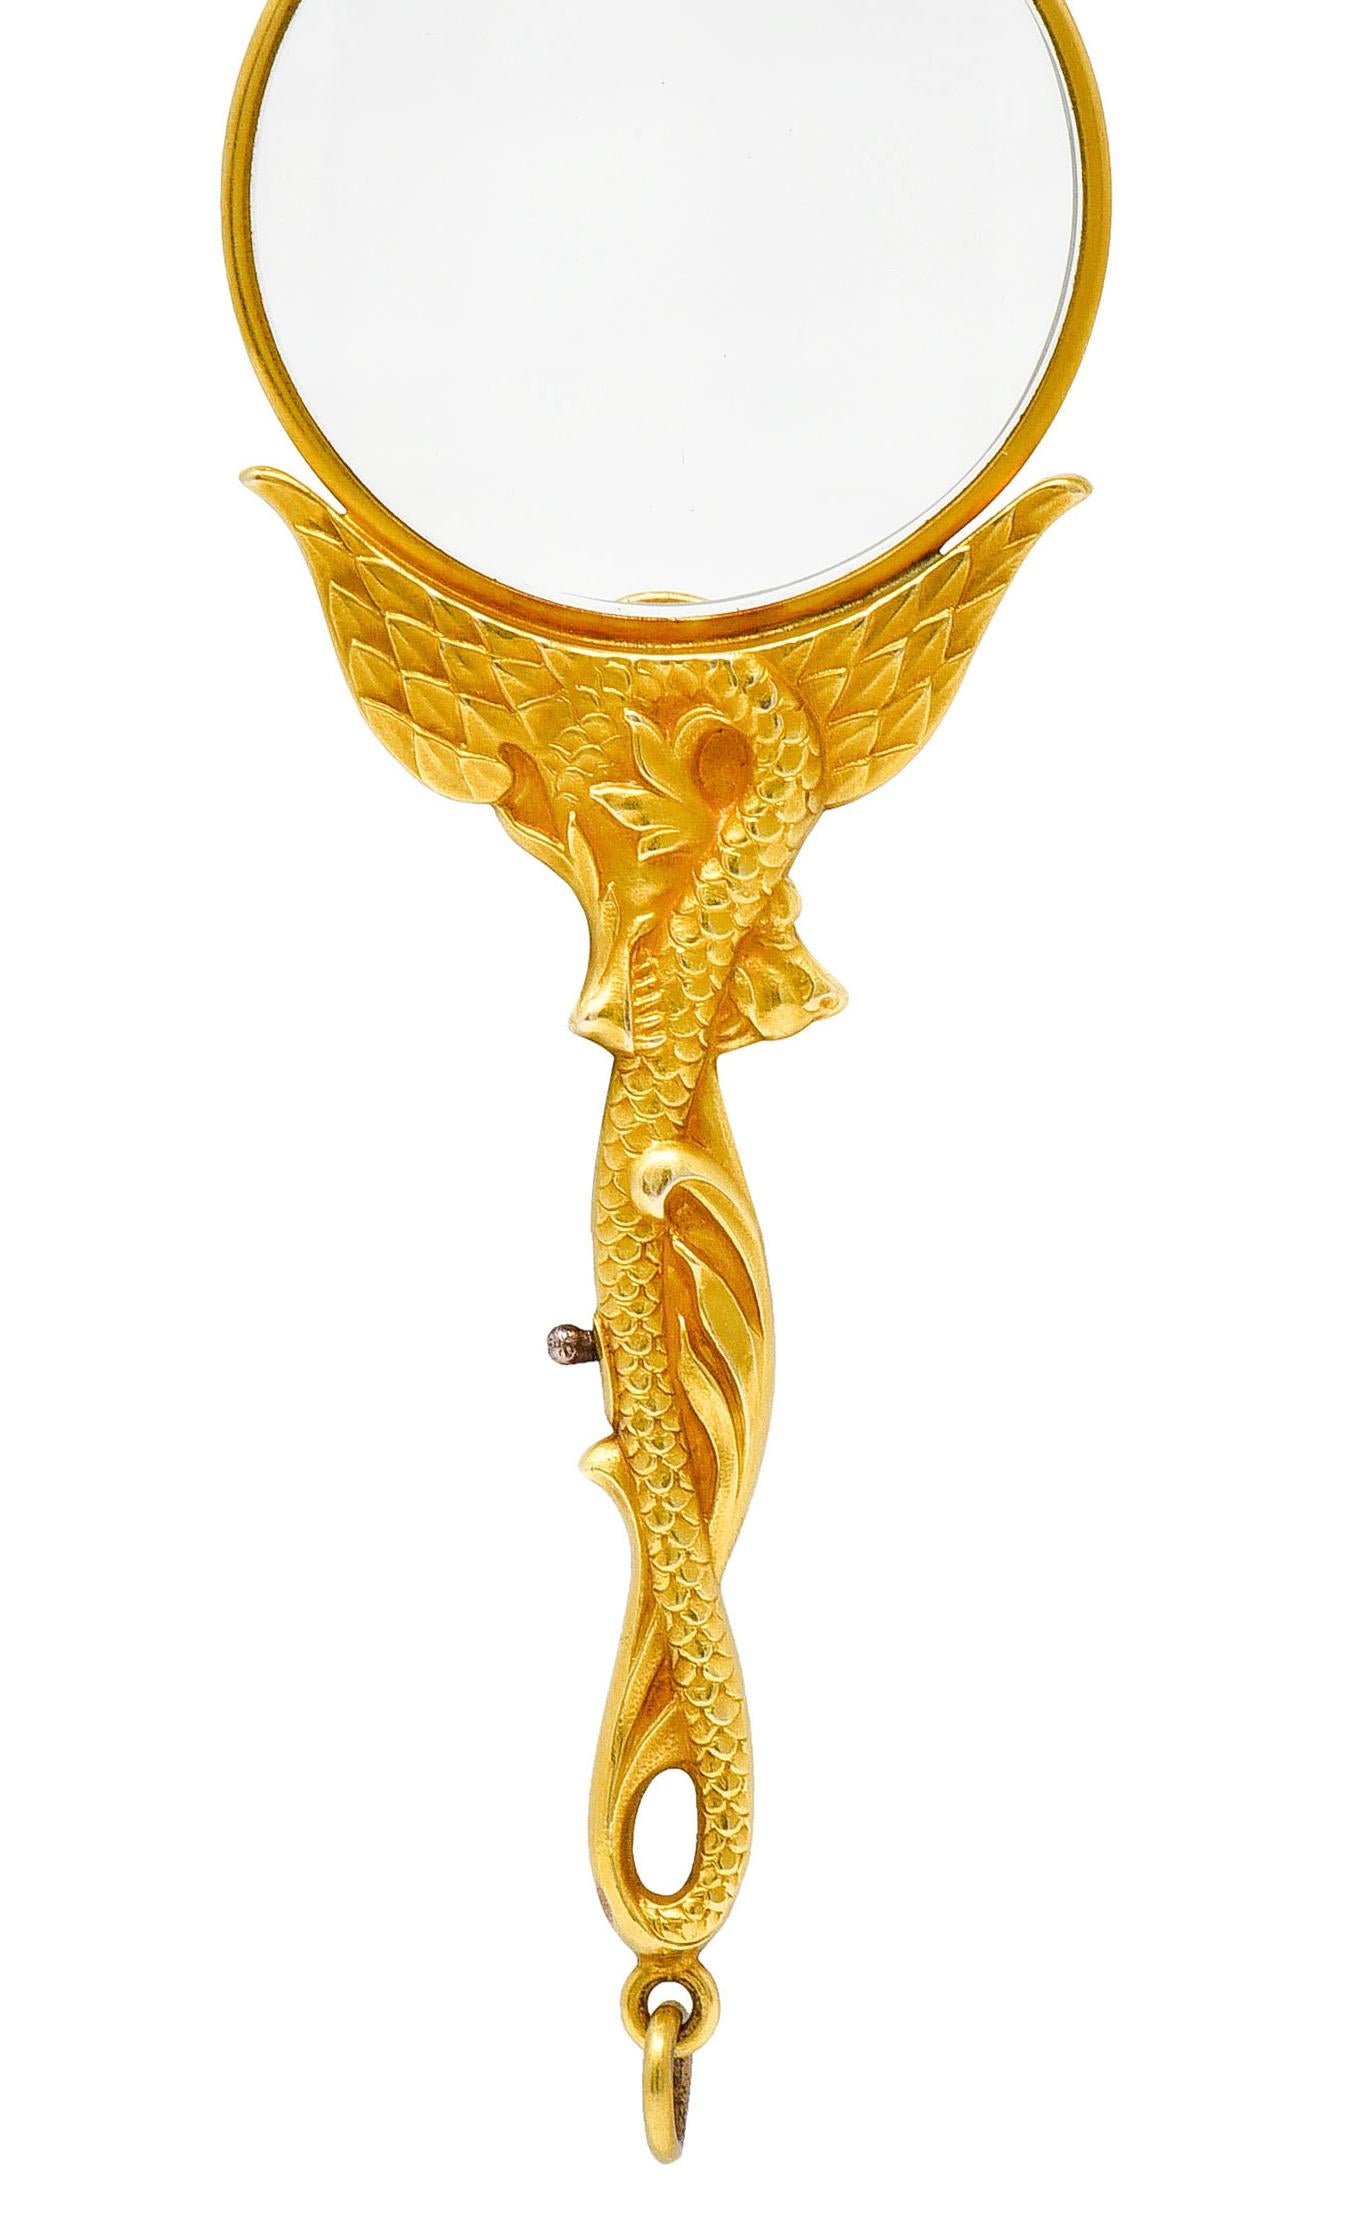 J. Solinger & Co. 14 Karat Gold Serpent Dragon Lorgnette Glasses Pendant 4